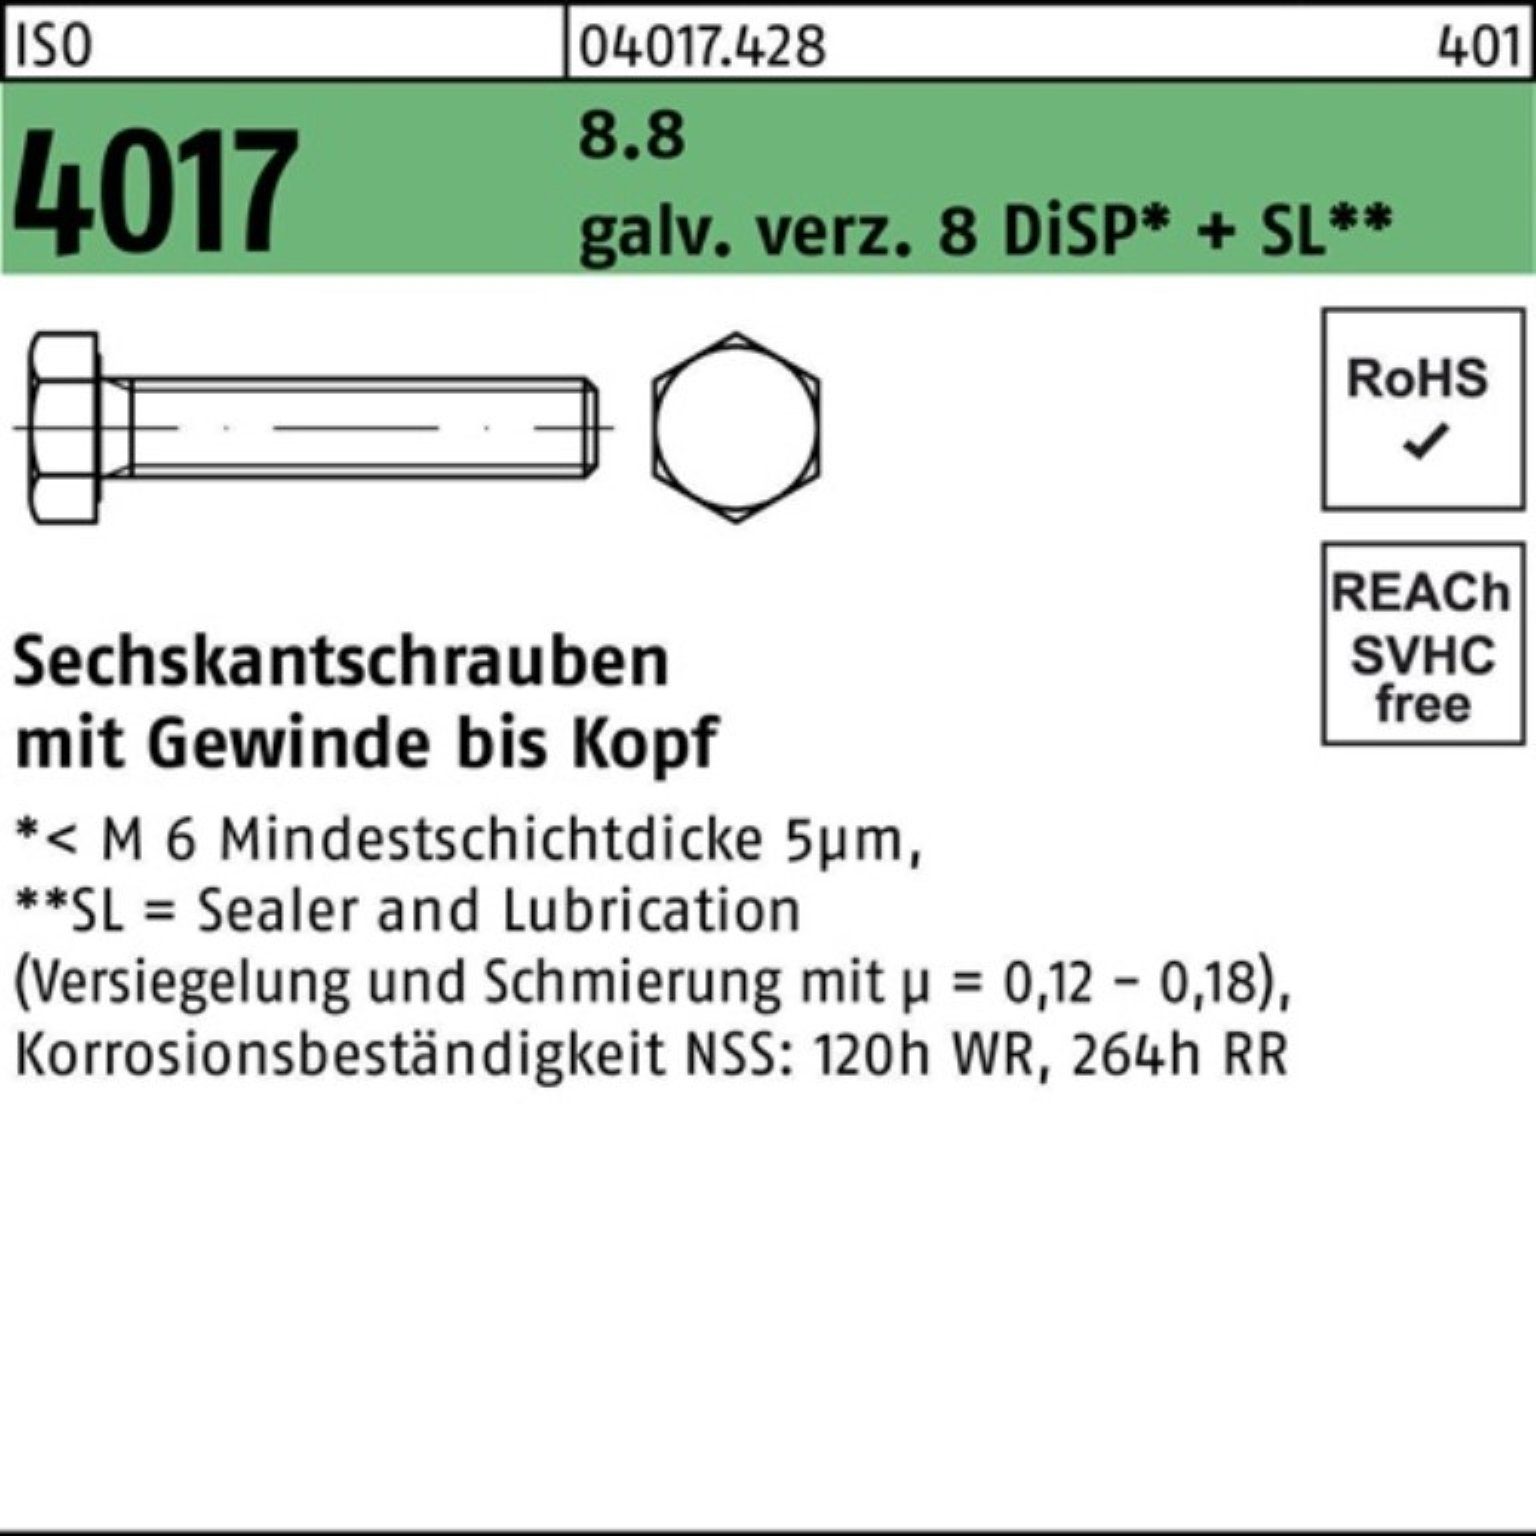 Bufab Sechskantschraube 100er ISO M12x DiS Pack 8 4017 8.8 VG 220 galv.verz. Sechskantschraube